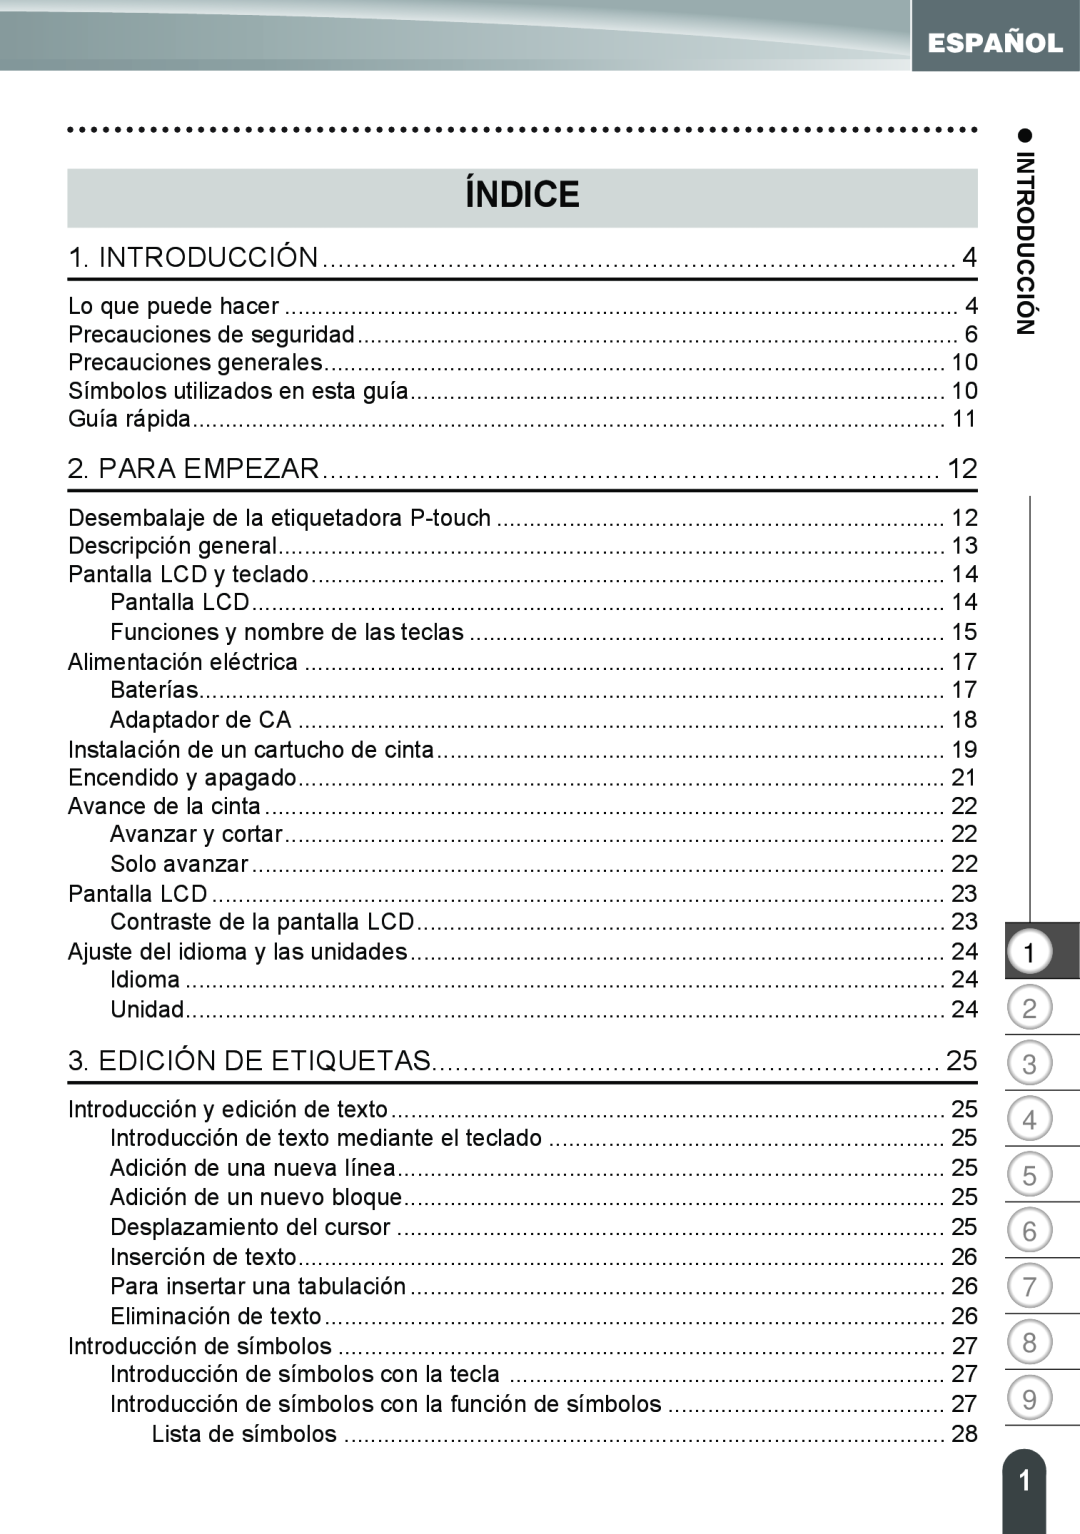 Brother PT-2100, PT-2110 manual Índice, Para Empezar, Edición De Etiquetas, z INTRODUCCIÓN 